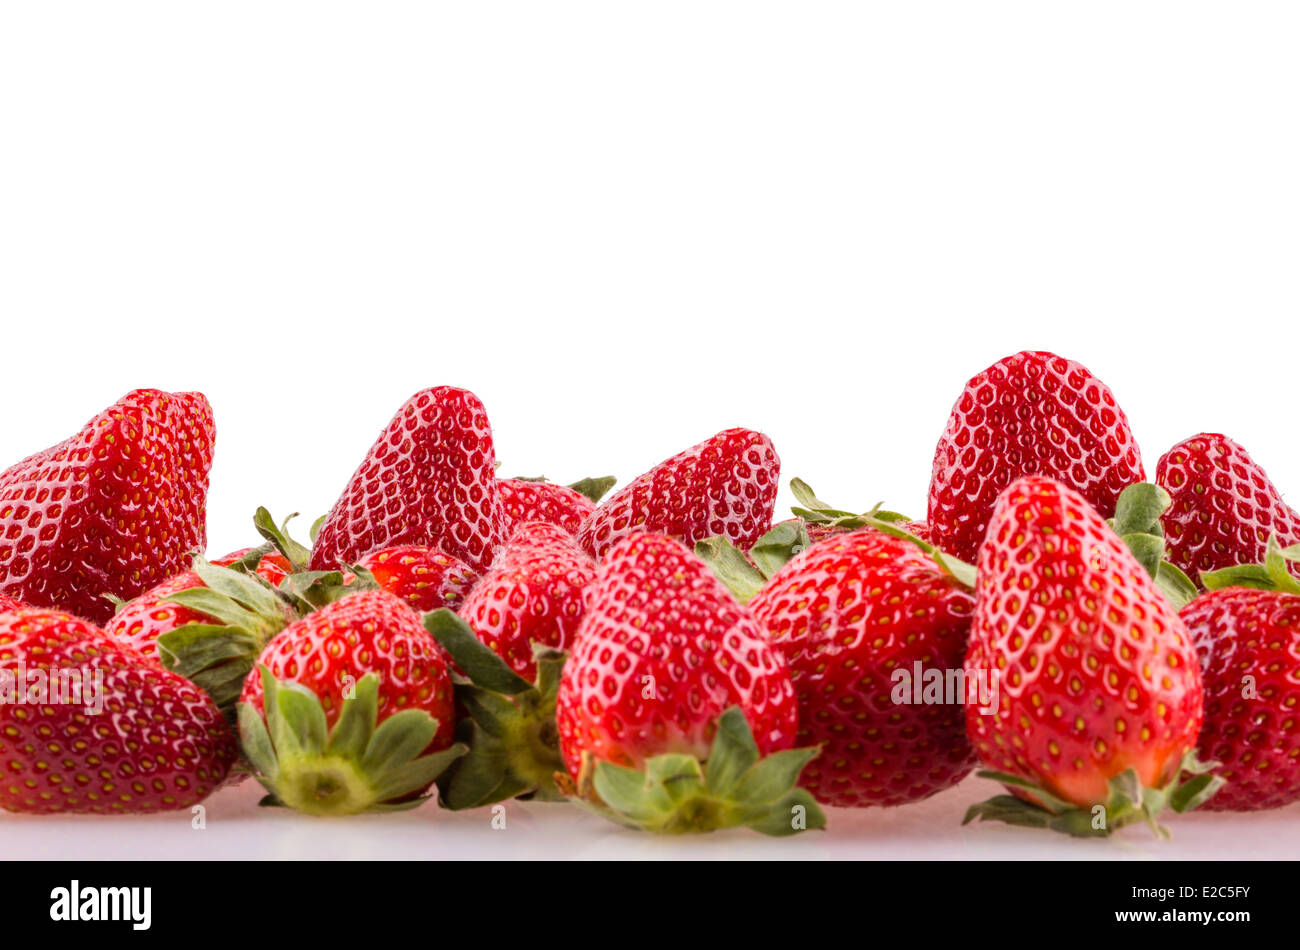 Fotos de Fresas Frescas, +89.000 Fotos de stock gratuitas de gran calidad